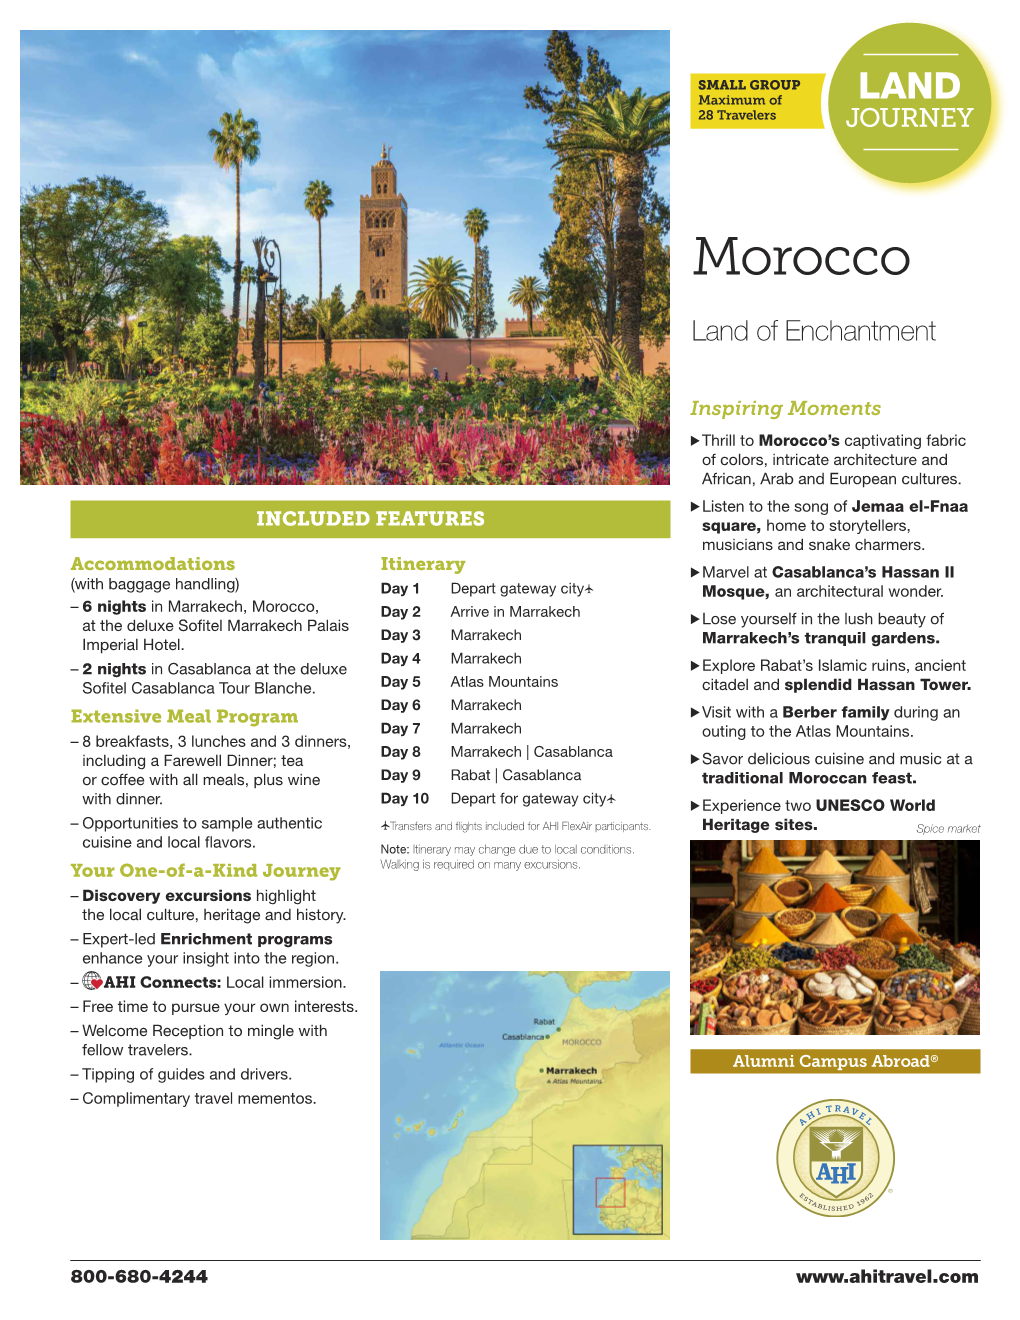 Morocco Land of Enchantment